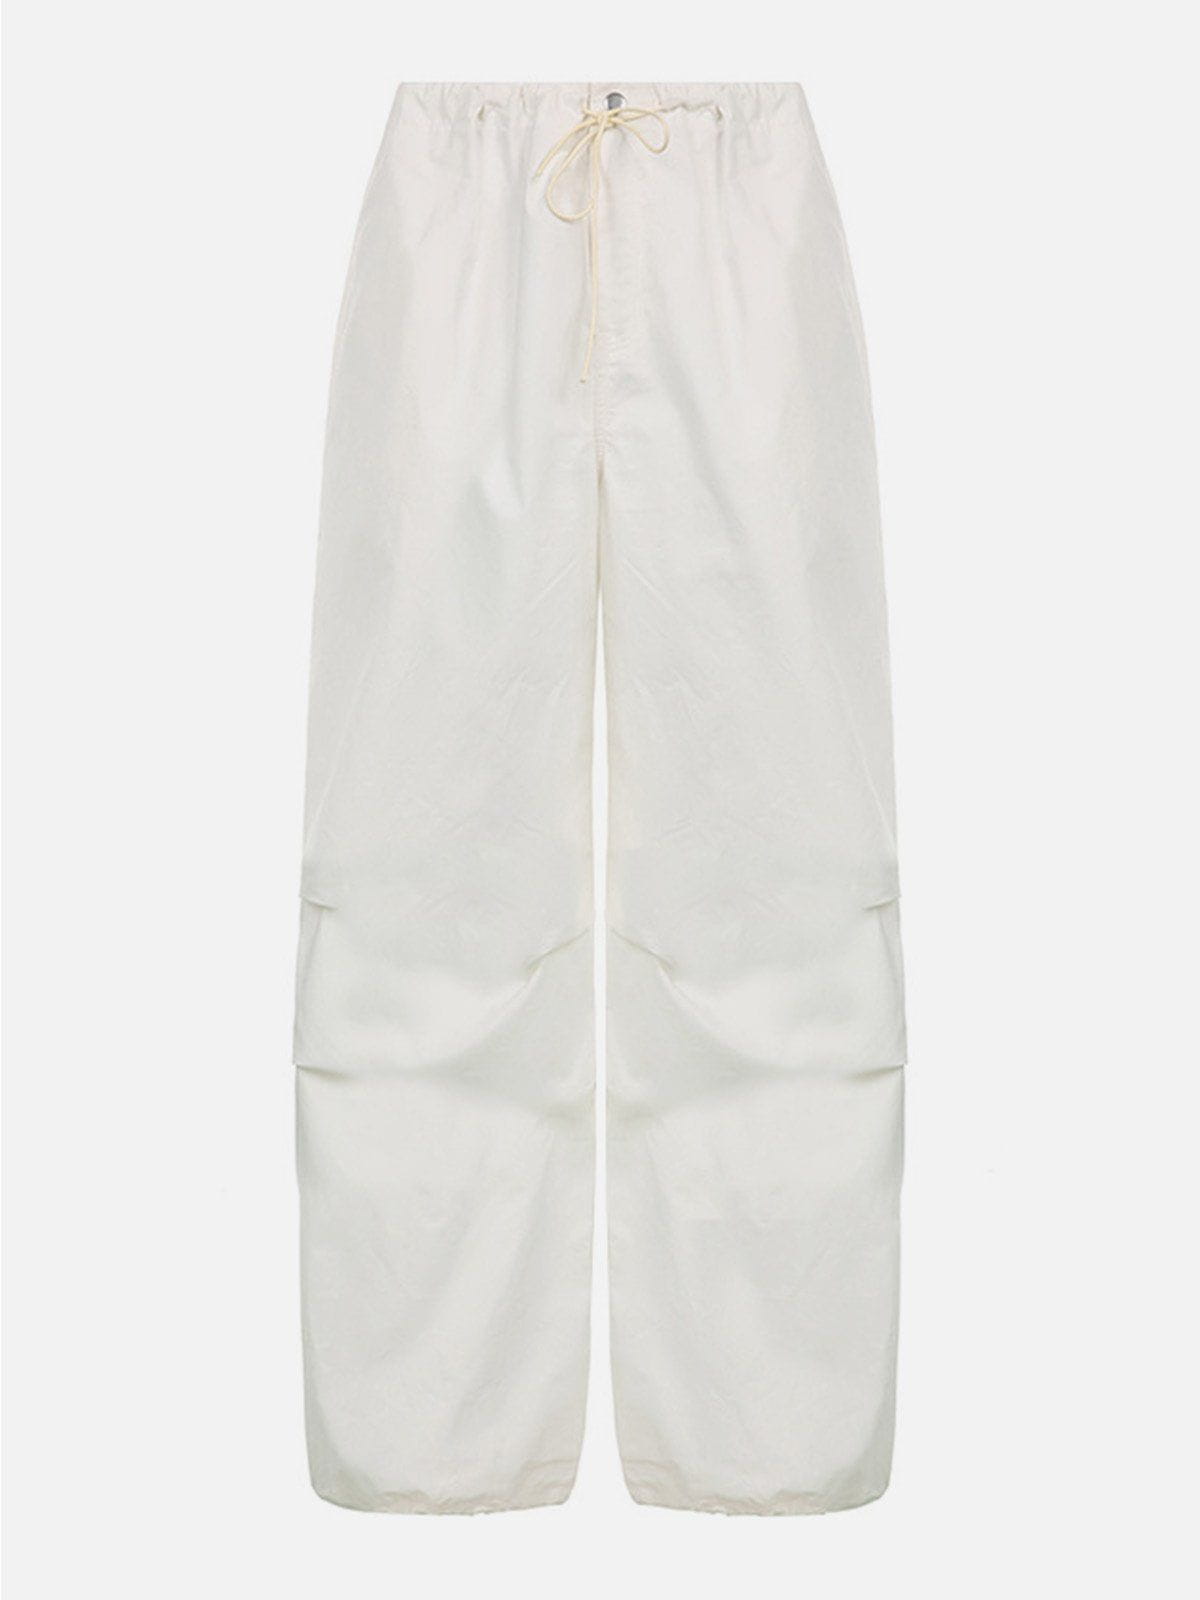 Majesda® - Pleated Loose Pants outfit ideas streetwear fashion